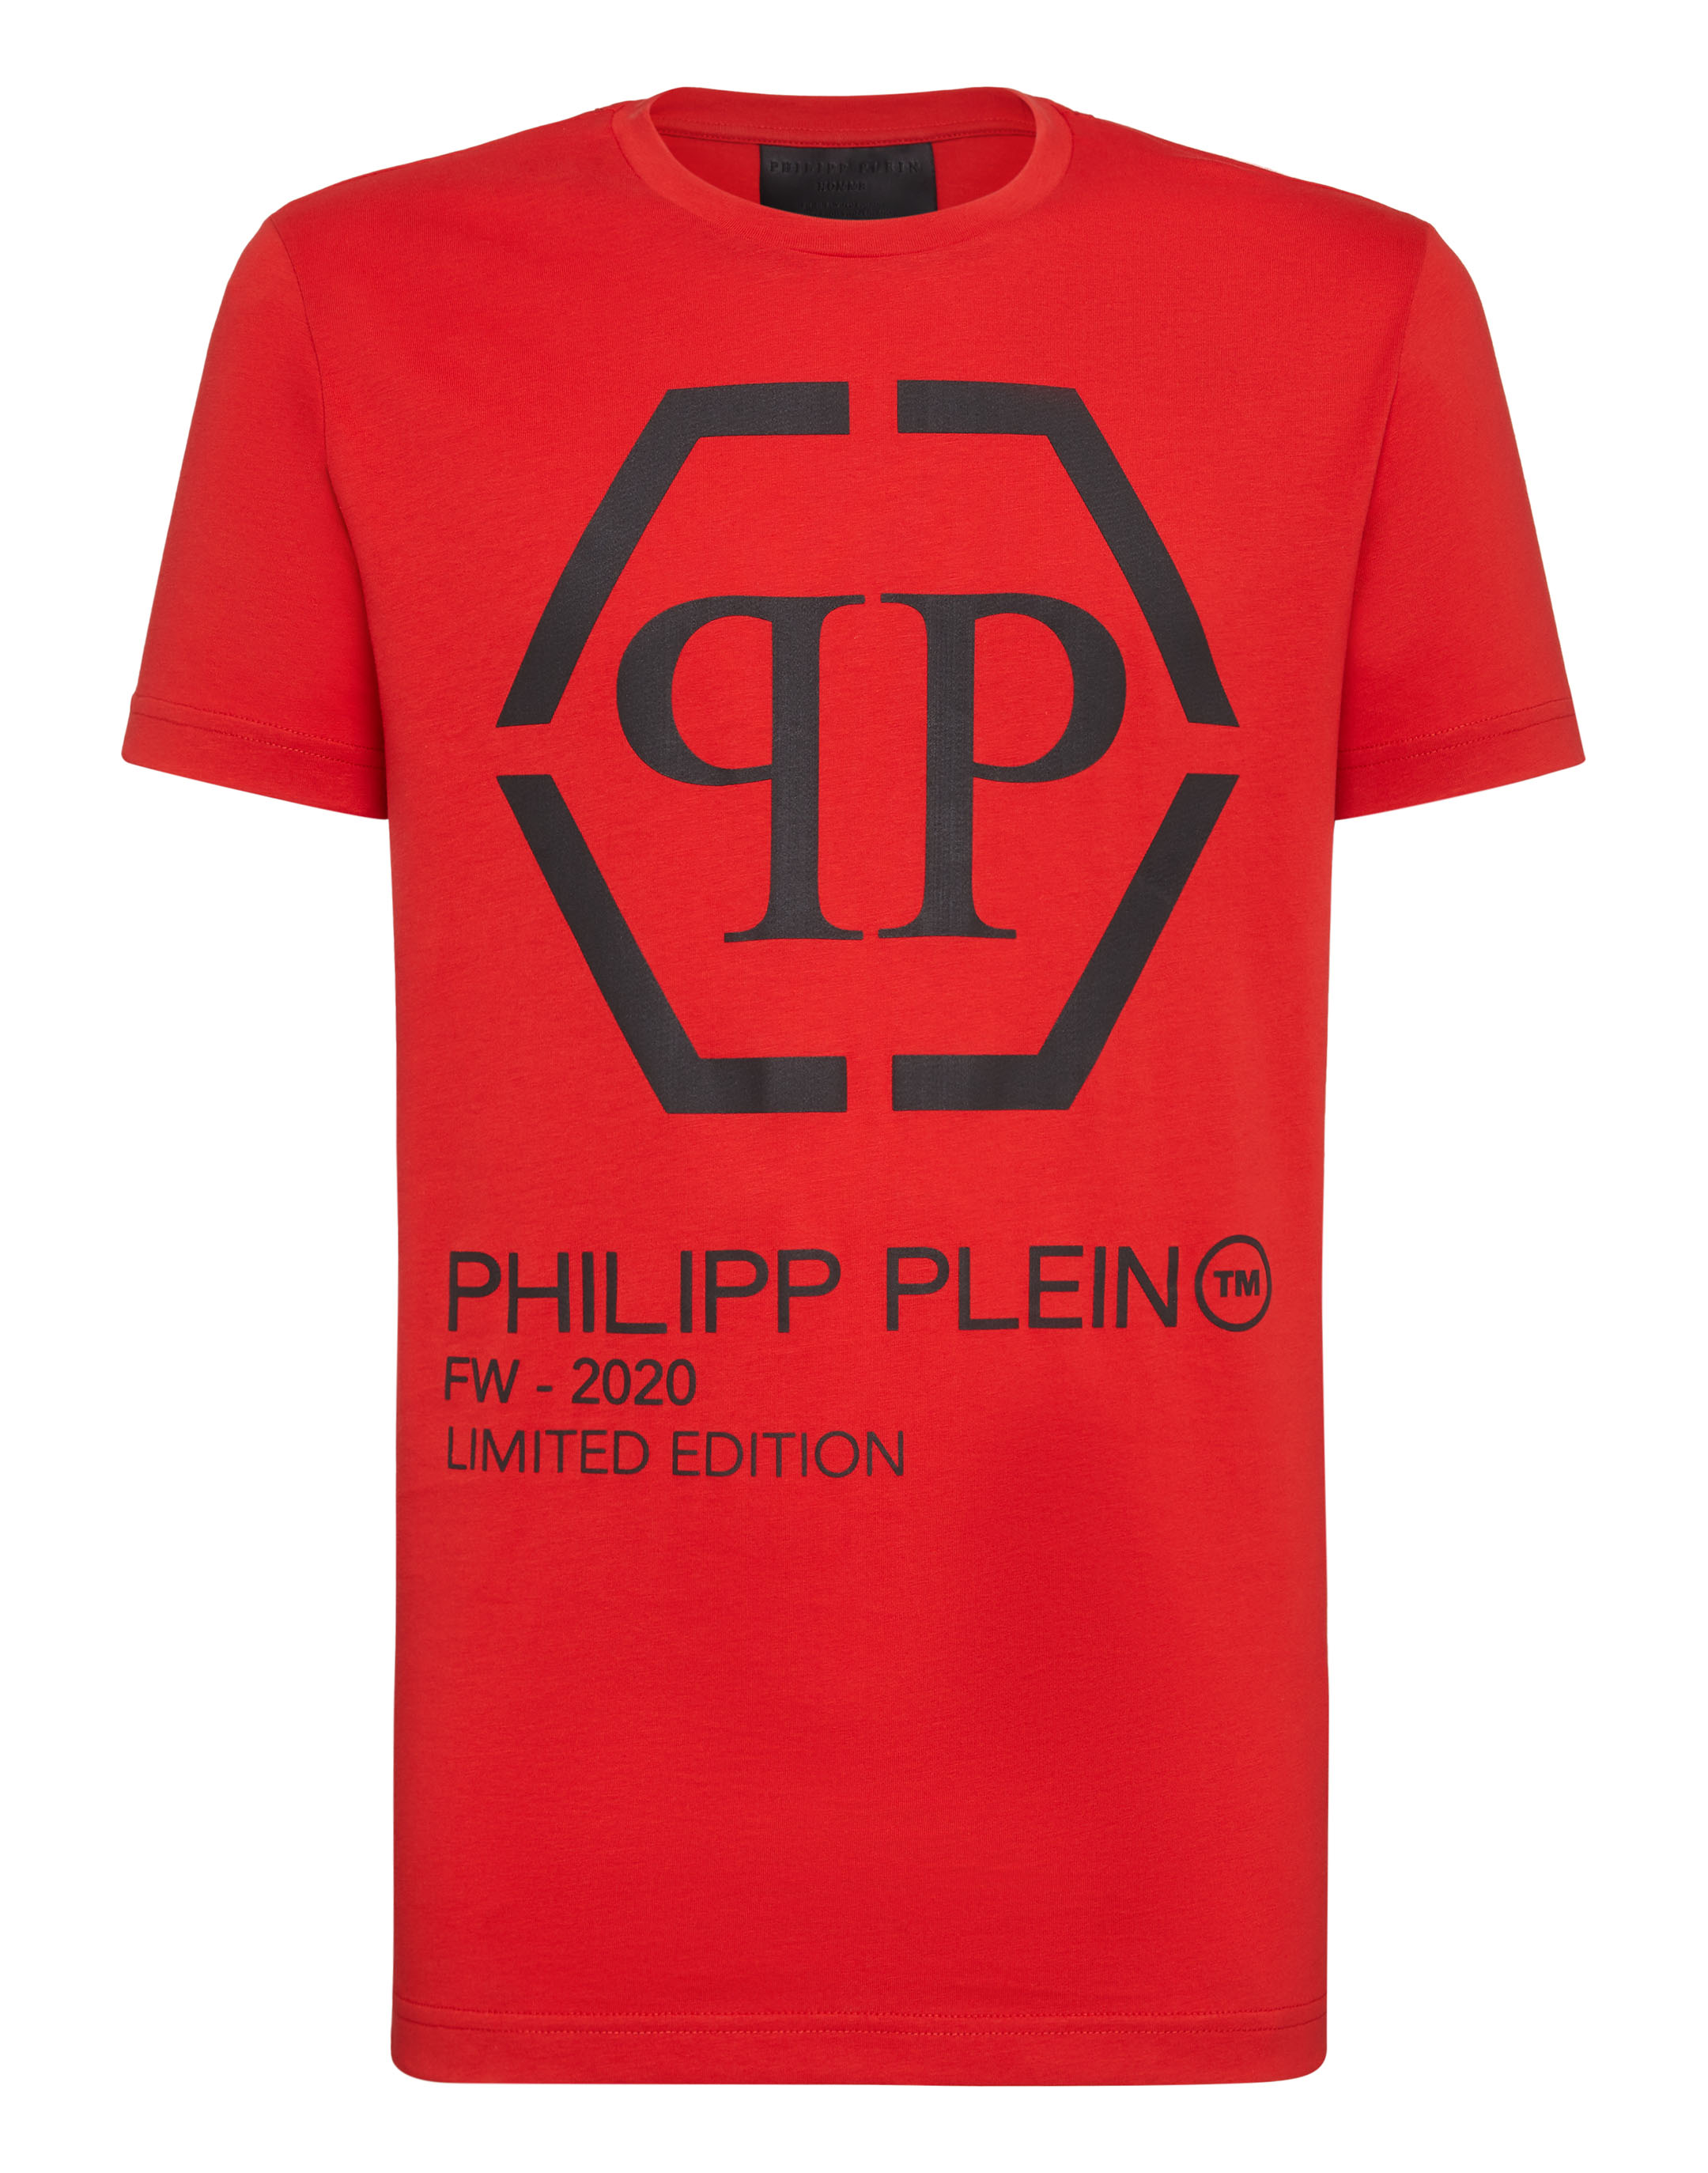 philipp plein red t shirt